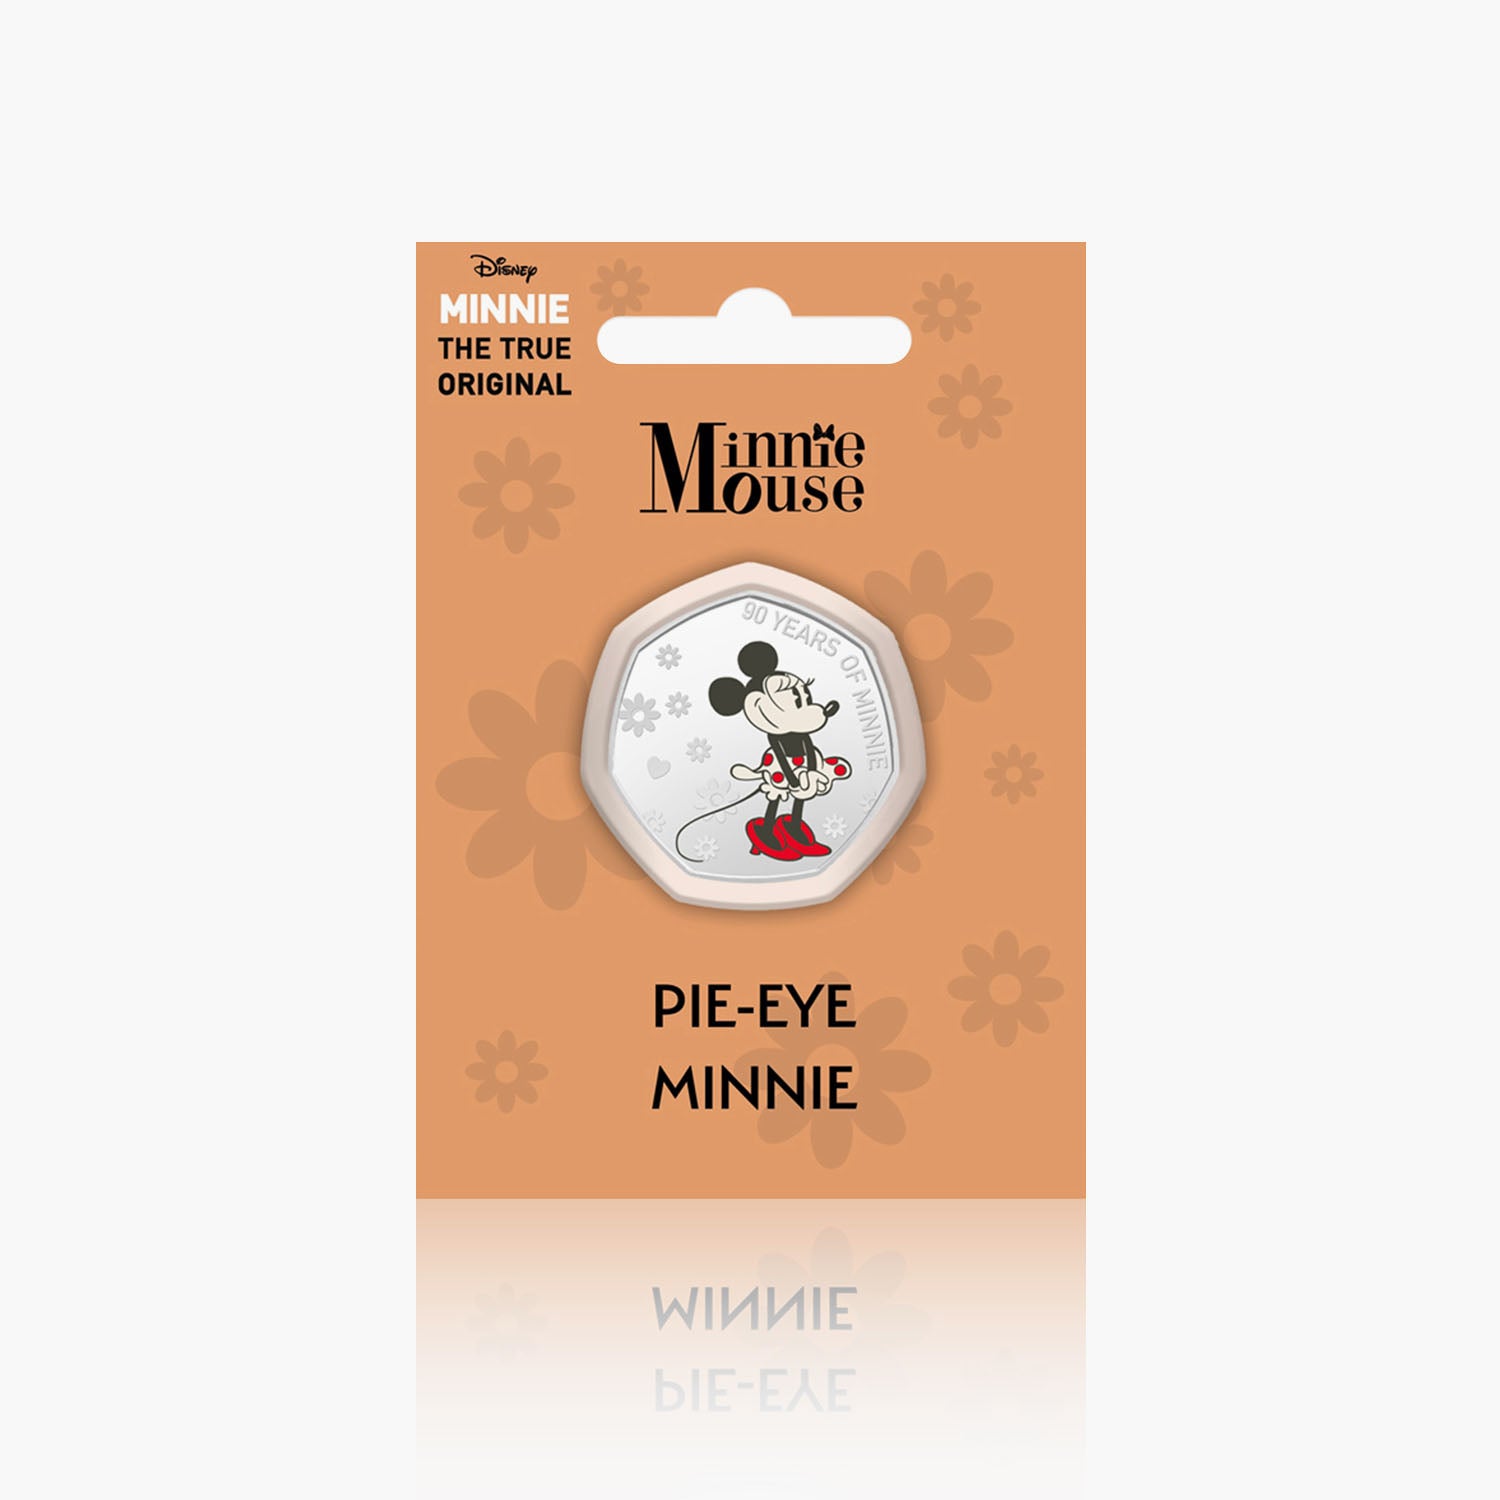 Pie-Eye Minnie Silver-Plated Commemorative